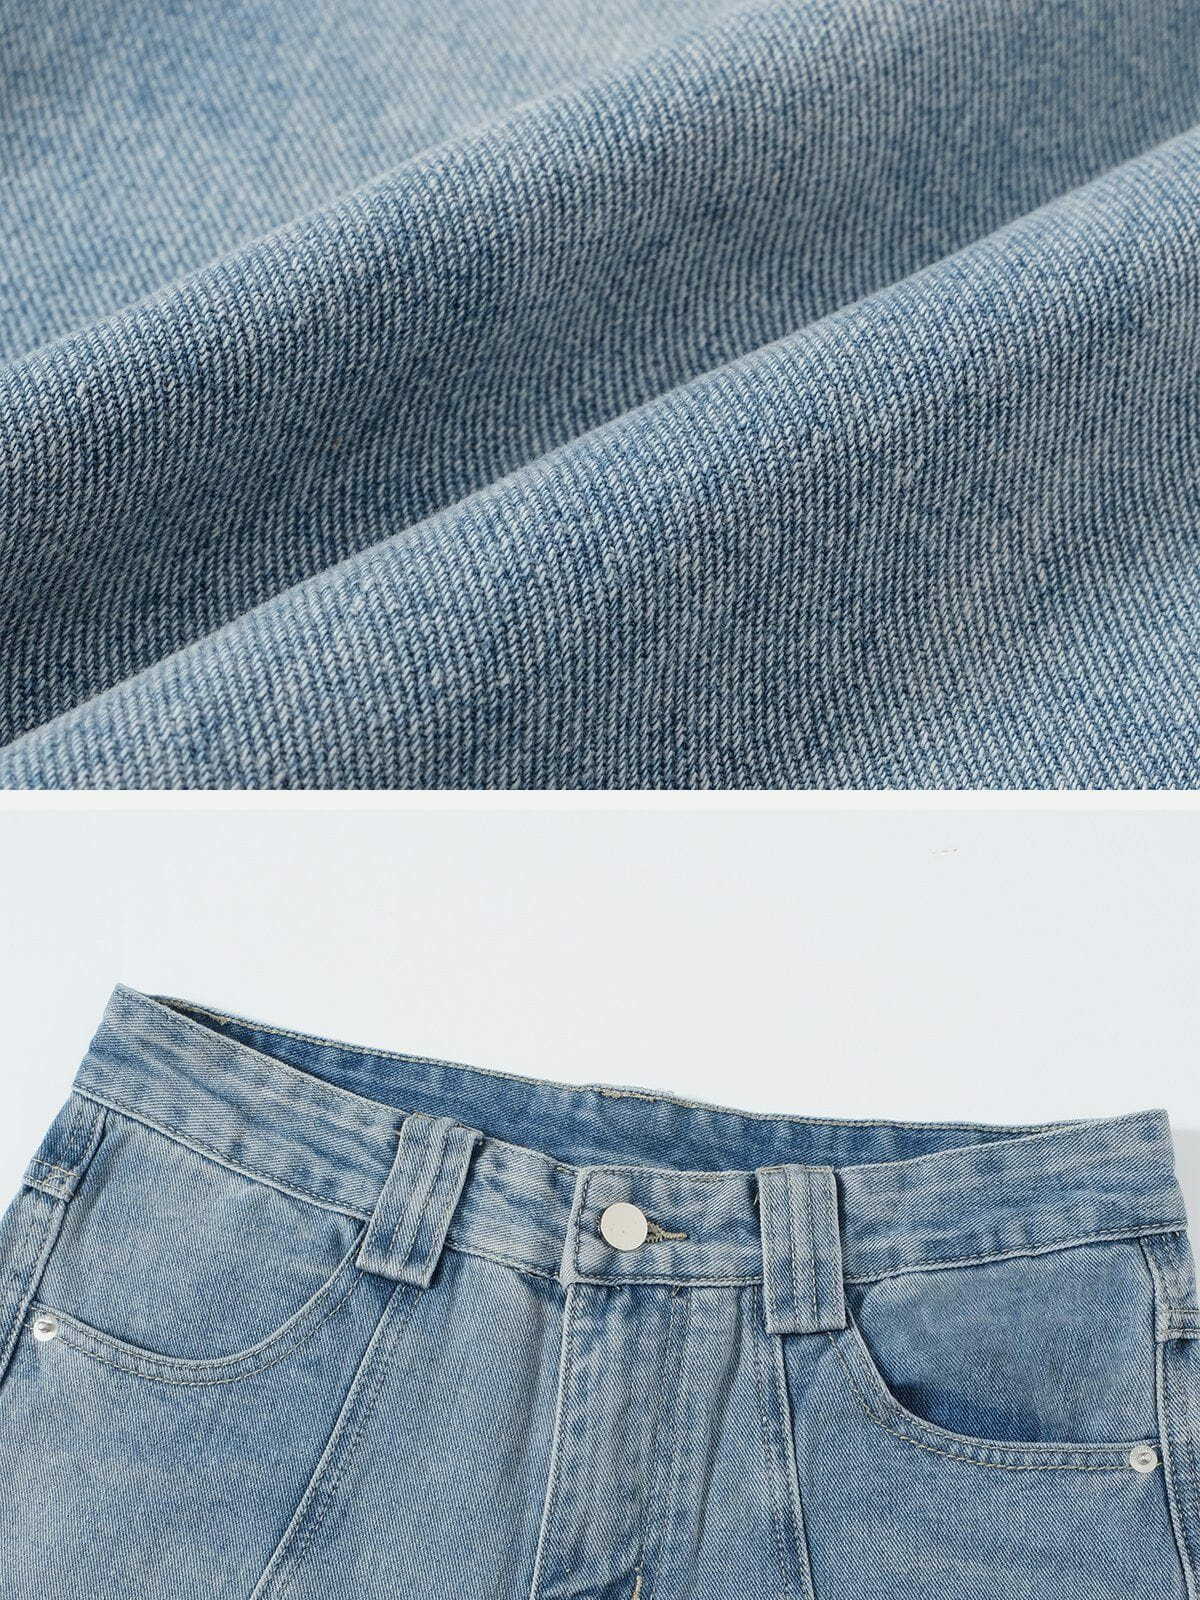 retro split jeans edgy & vintage washed 7243